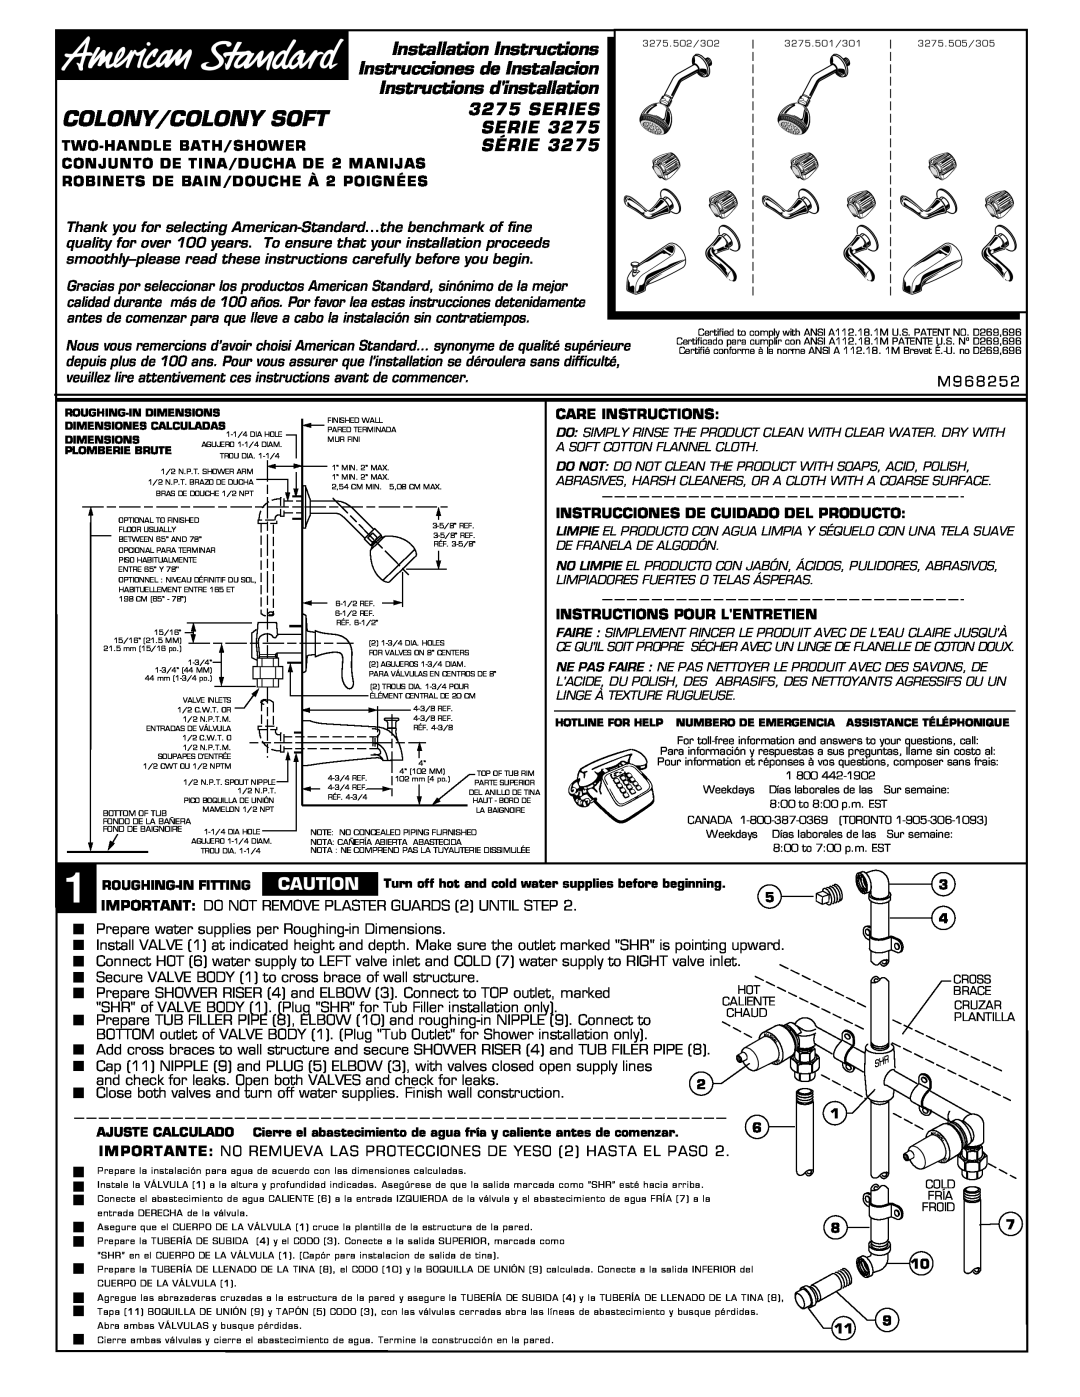 American Standard 3275 SERIES installation instructions Two-Handle Bath/Shower, CONJUNTO DE TINA/DUCHA DE 2 MANIJAS, Serie 